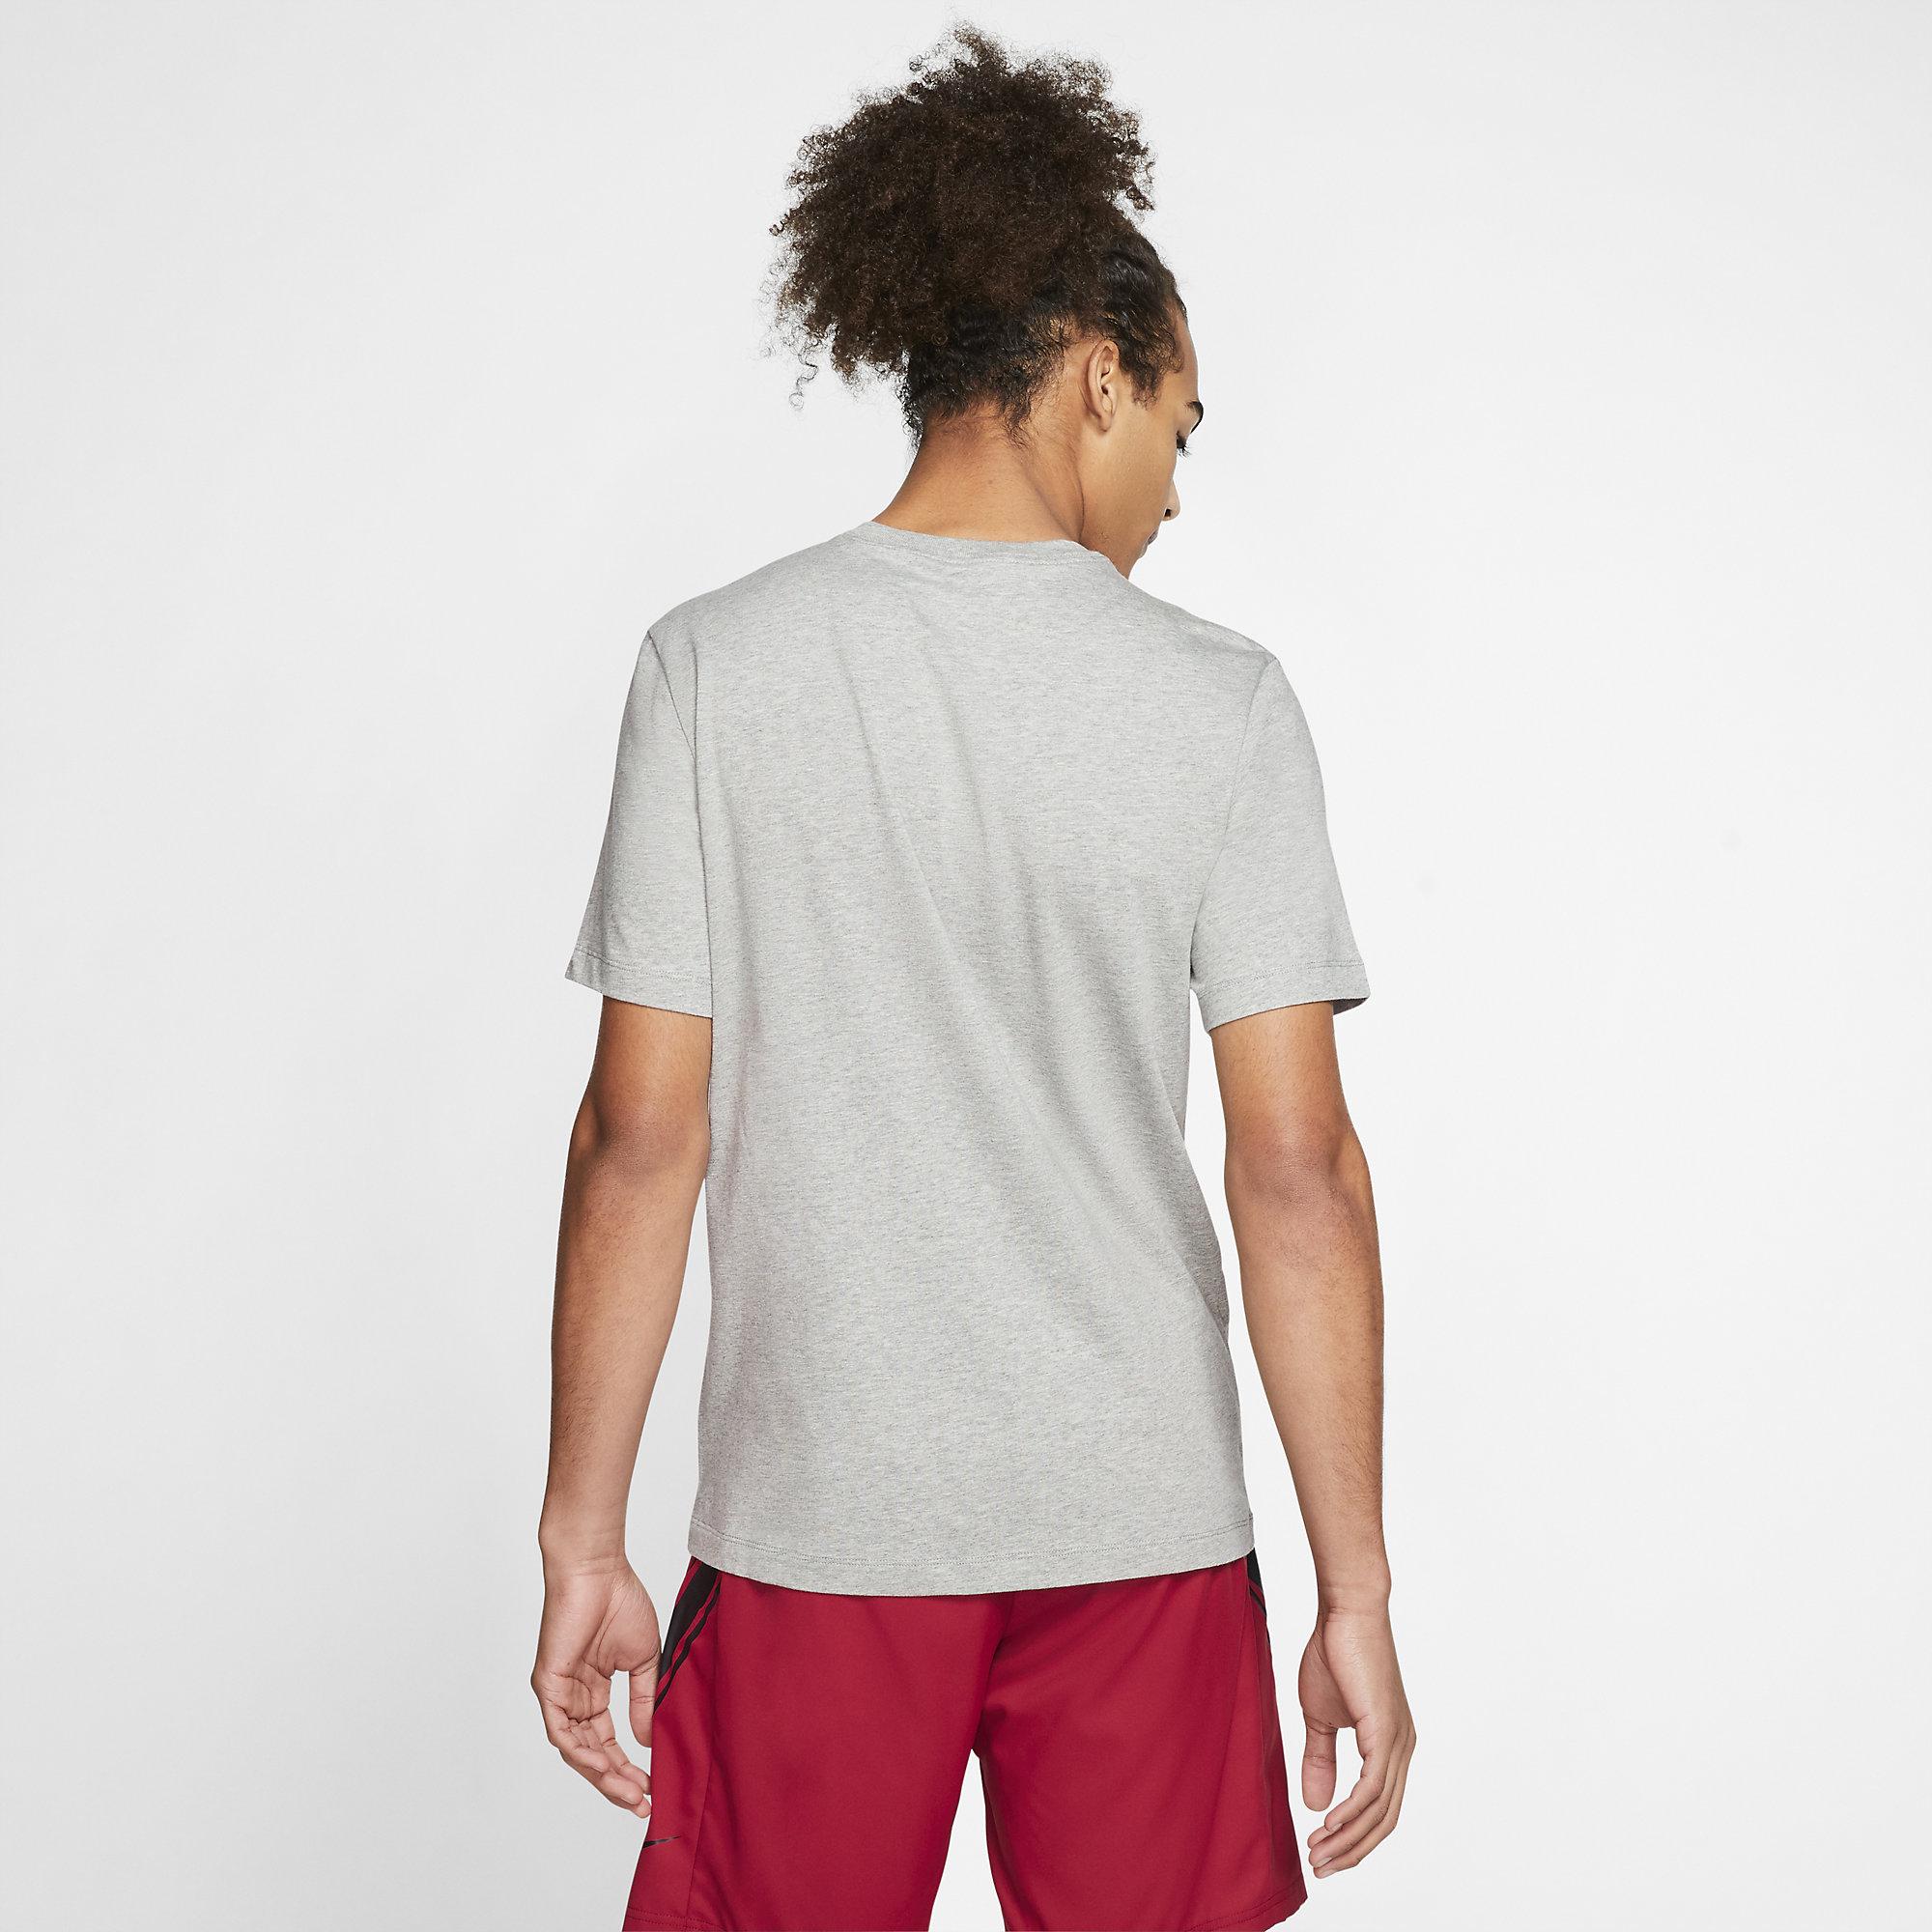 Nike Mens Tennis T-Shirt - Dark Grey/Heather - Tennisnuts.com